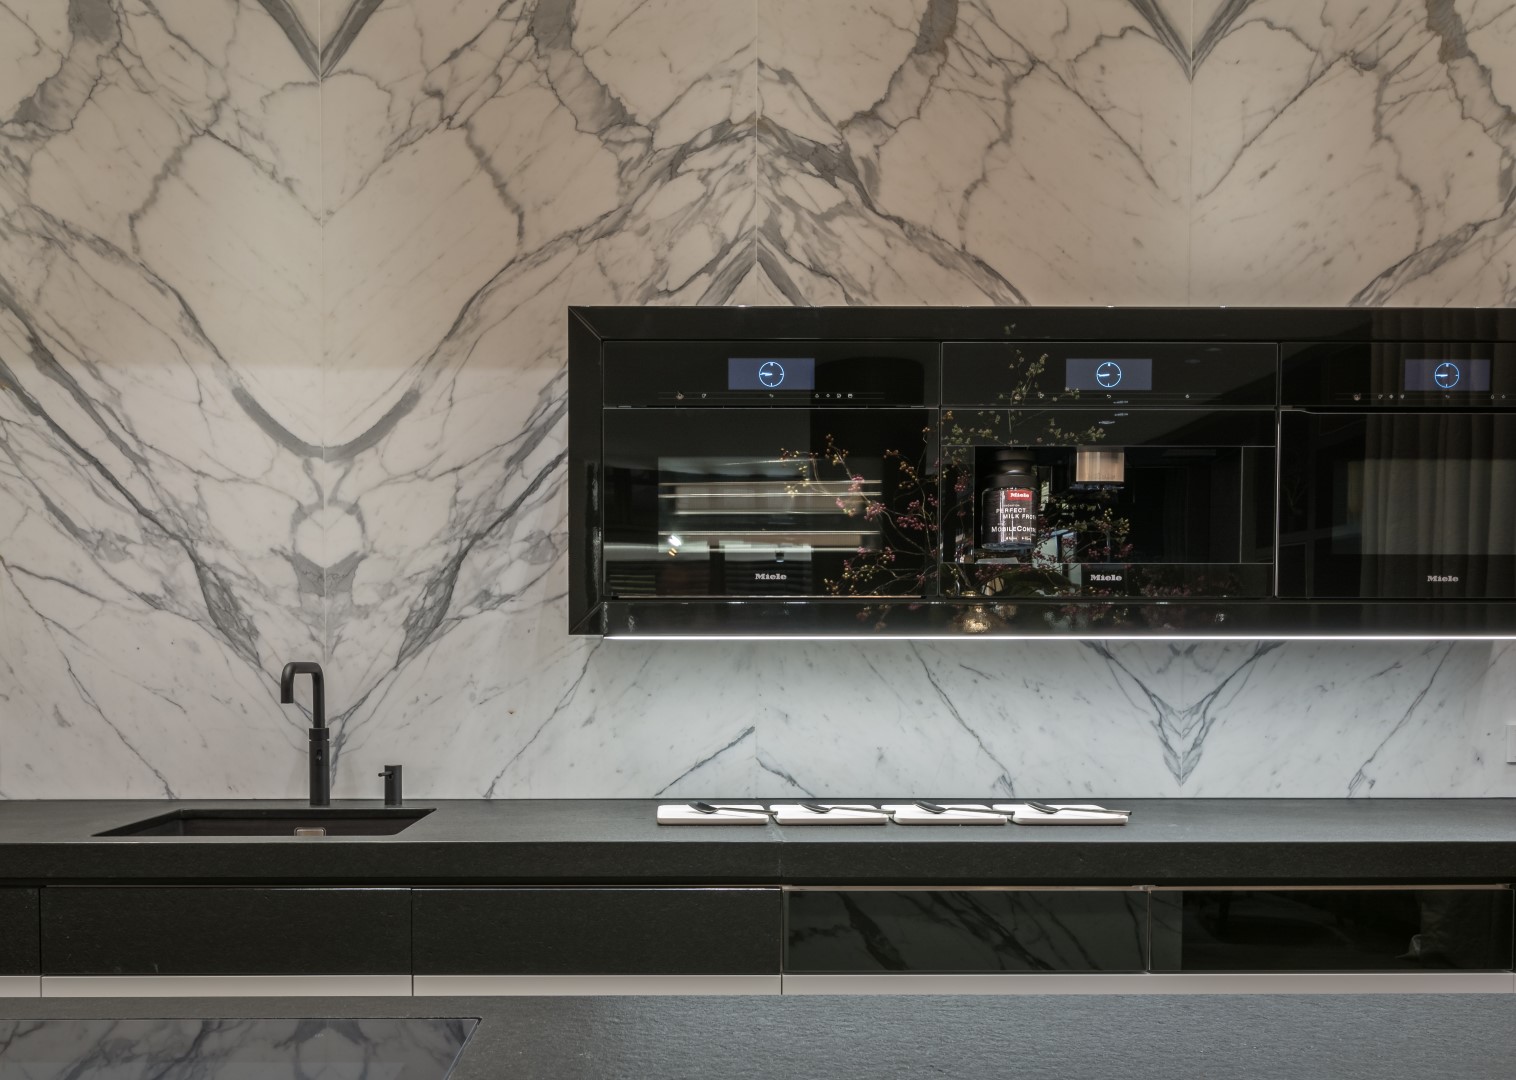 Achterwand van natuursteen en Miele apperatuur in maatwerk keuken met klasieke zwart-wit patroon in modern jasje.